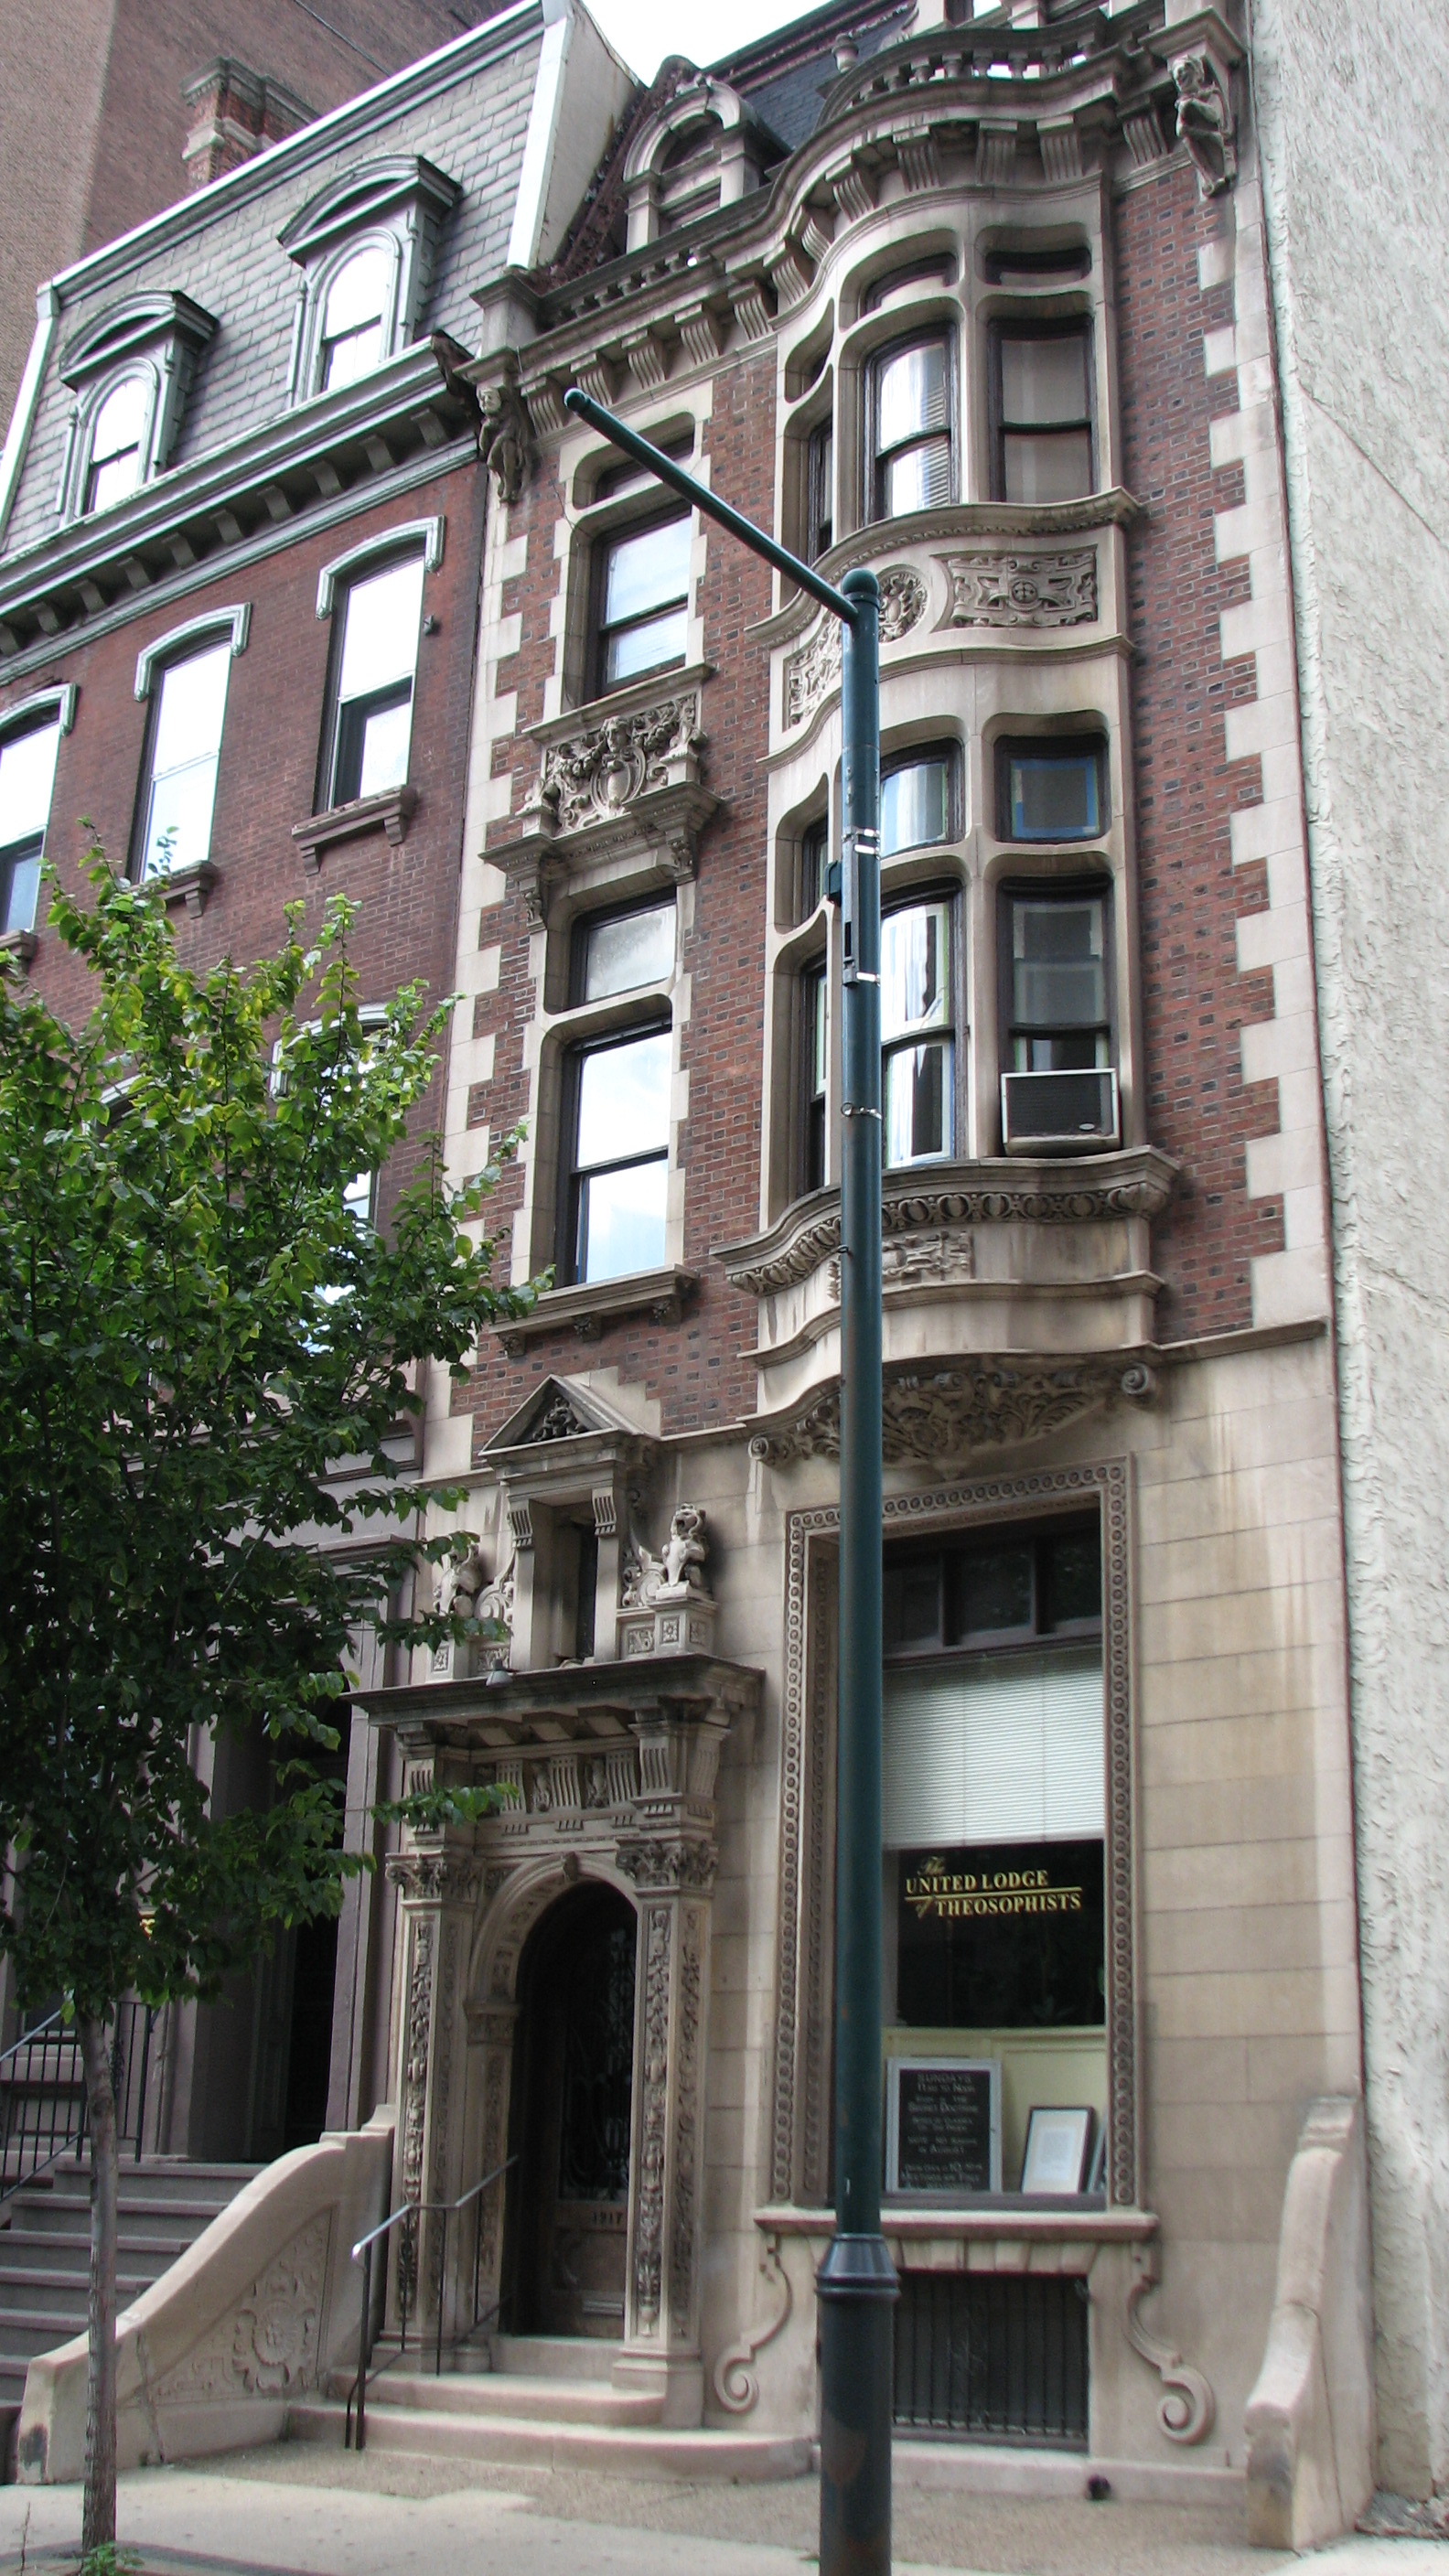 The elegant building at 1917 Walnut was designed by Joseph Huston.  